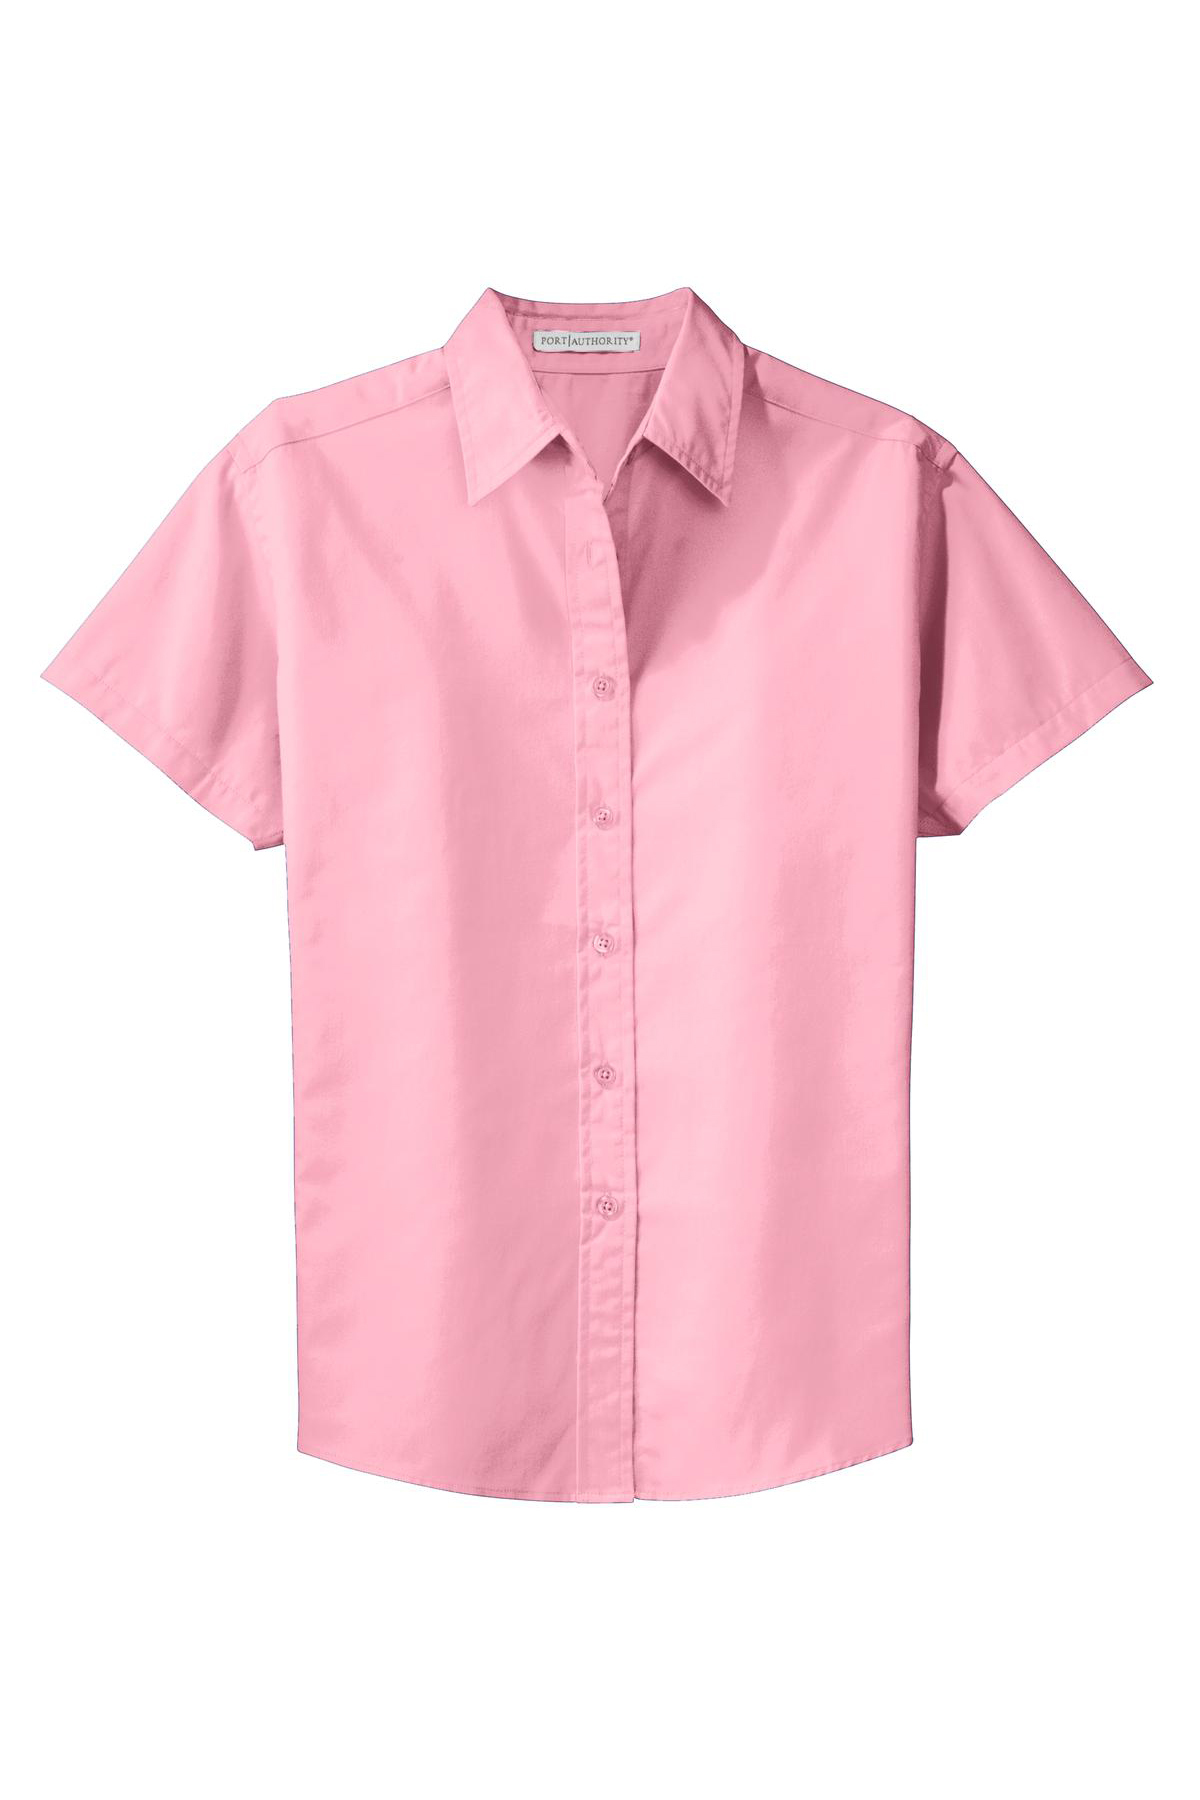 Port Authority Ladies Short Sleeve Easy Care Shirt | Product | SanMar